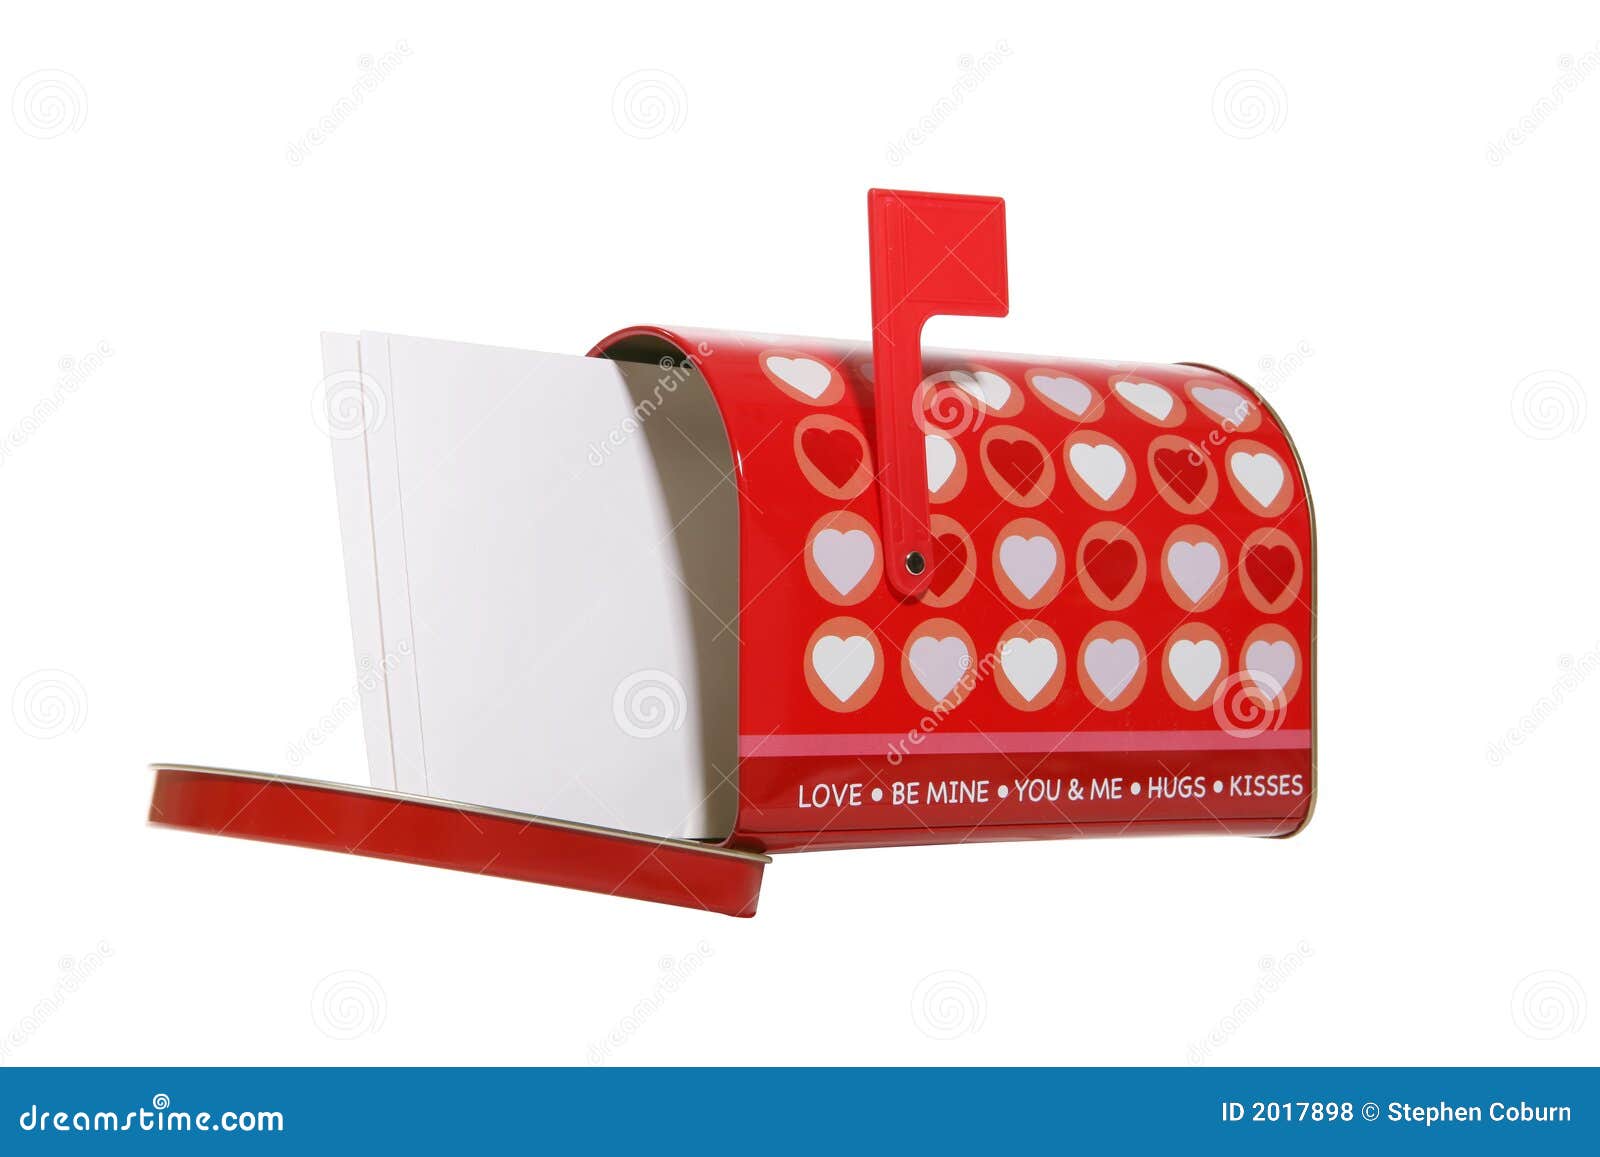 valentine mailbox clipart - photo #20